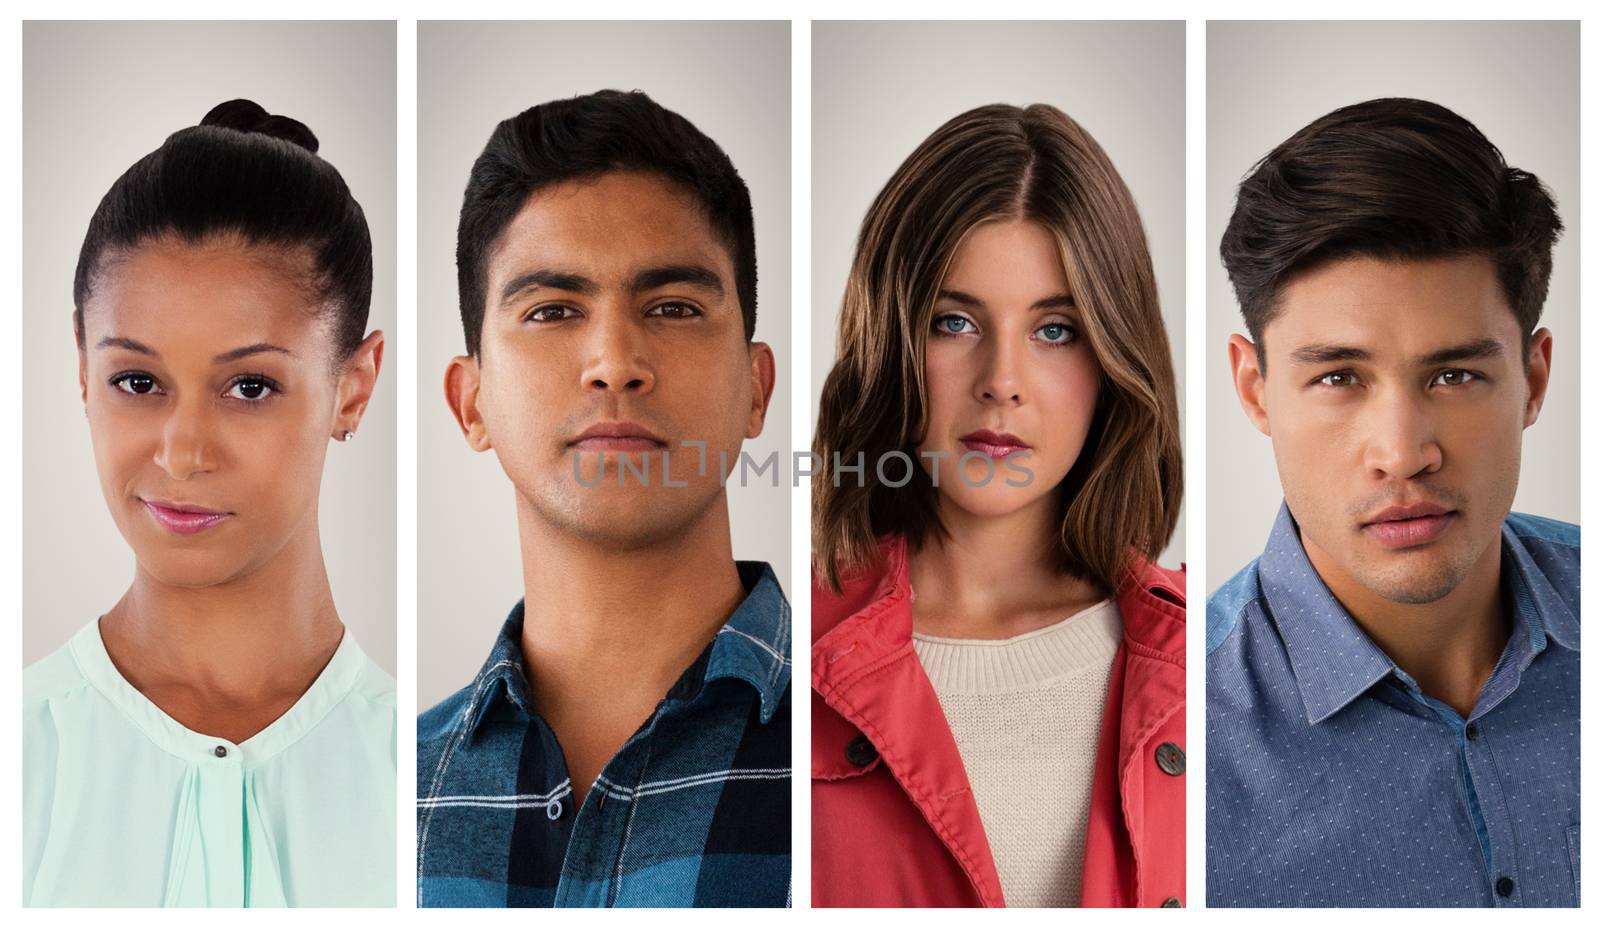 People collage portrait by Wavebreakmedia